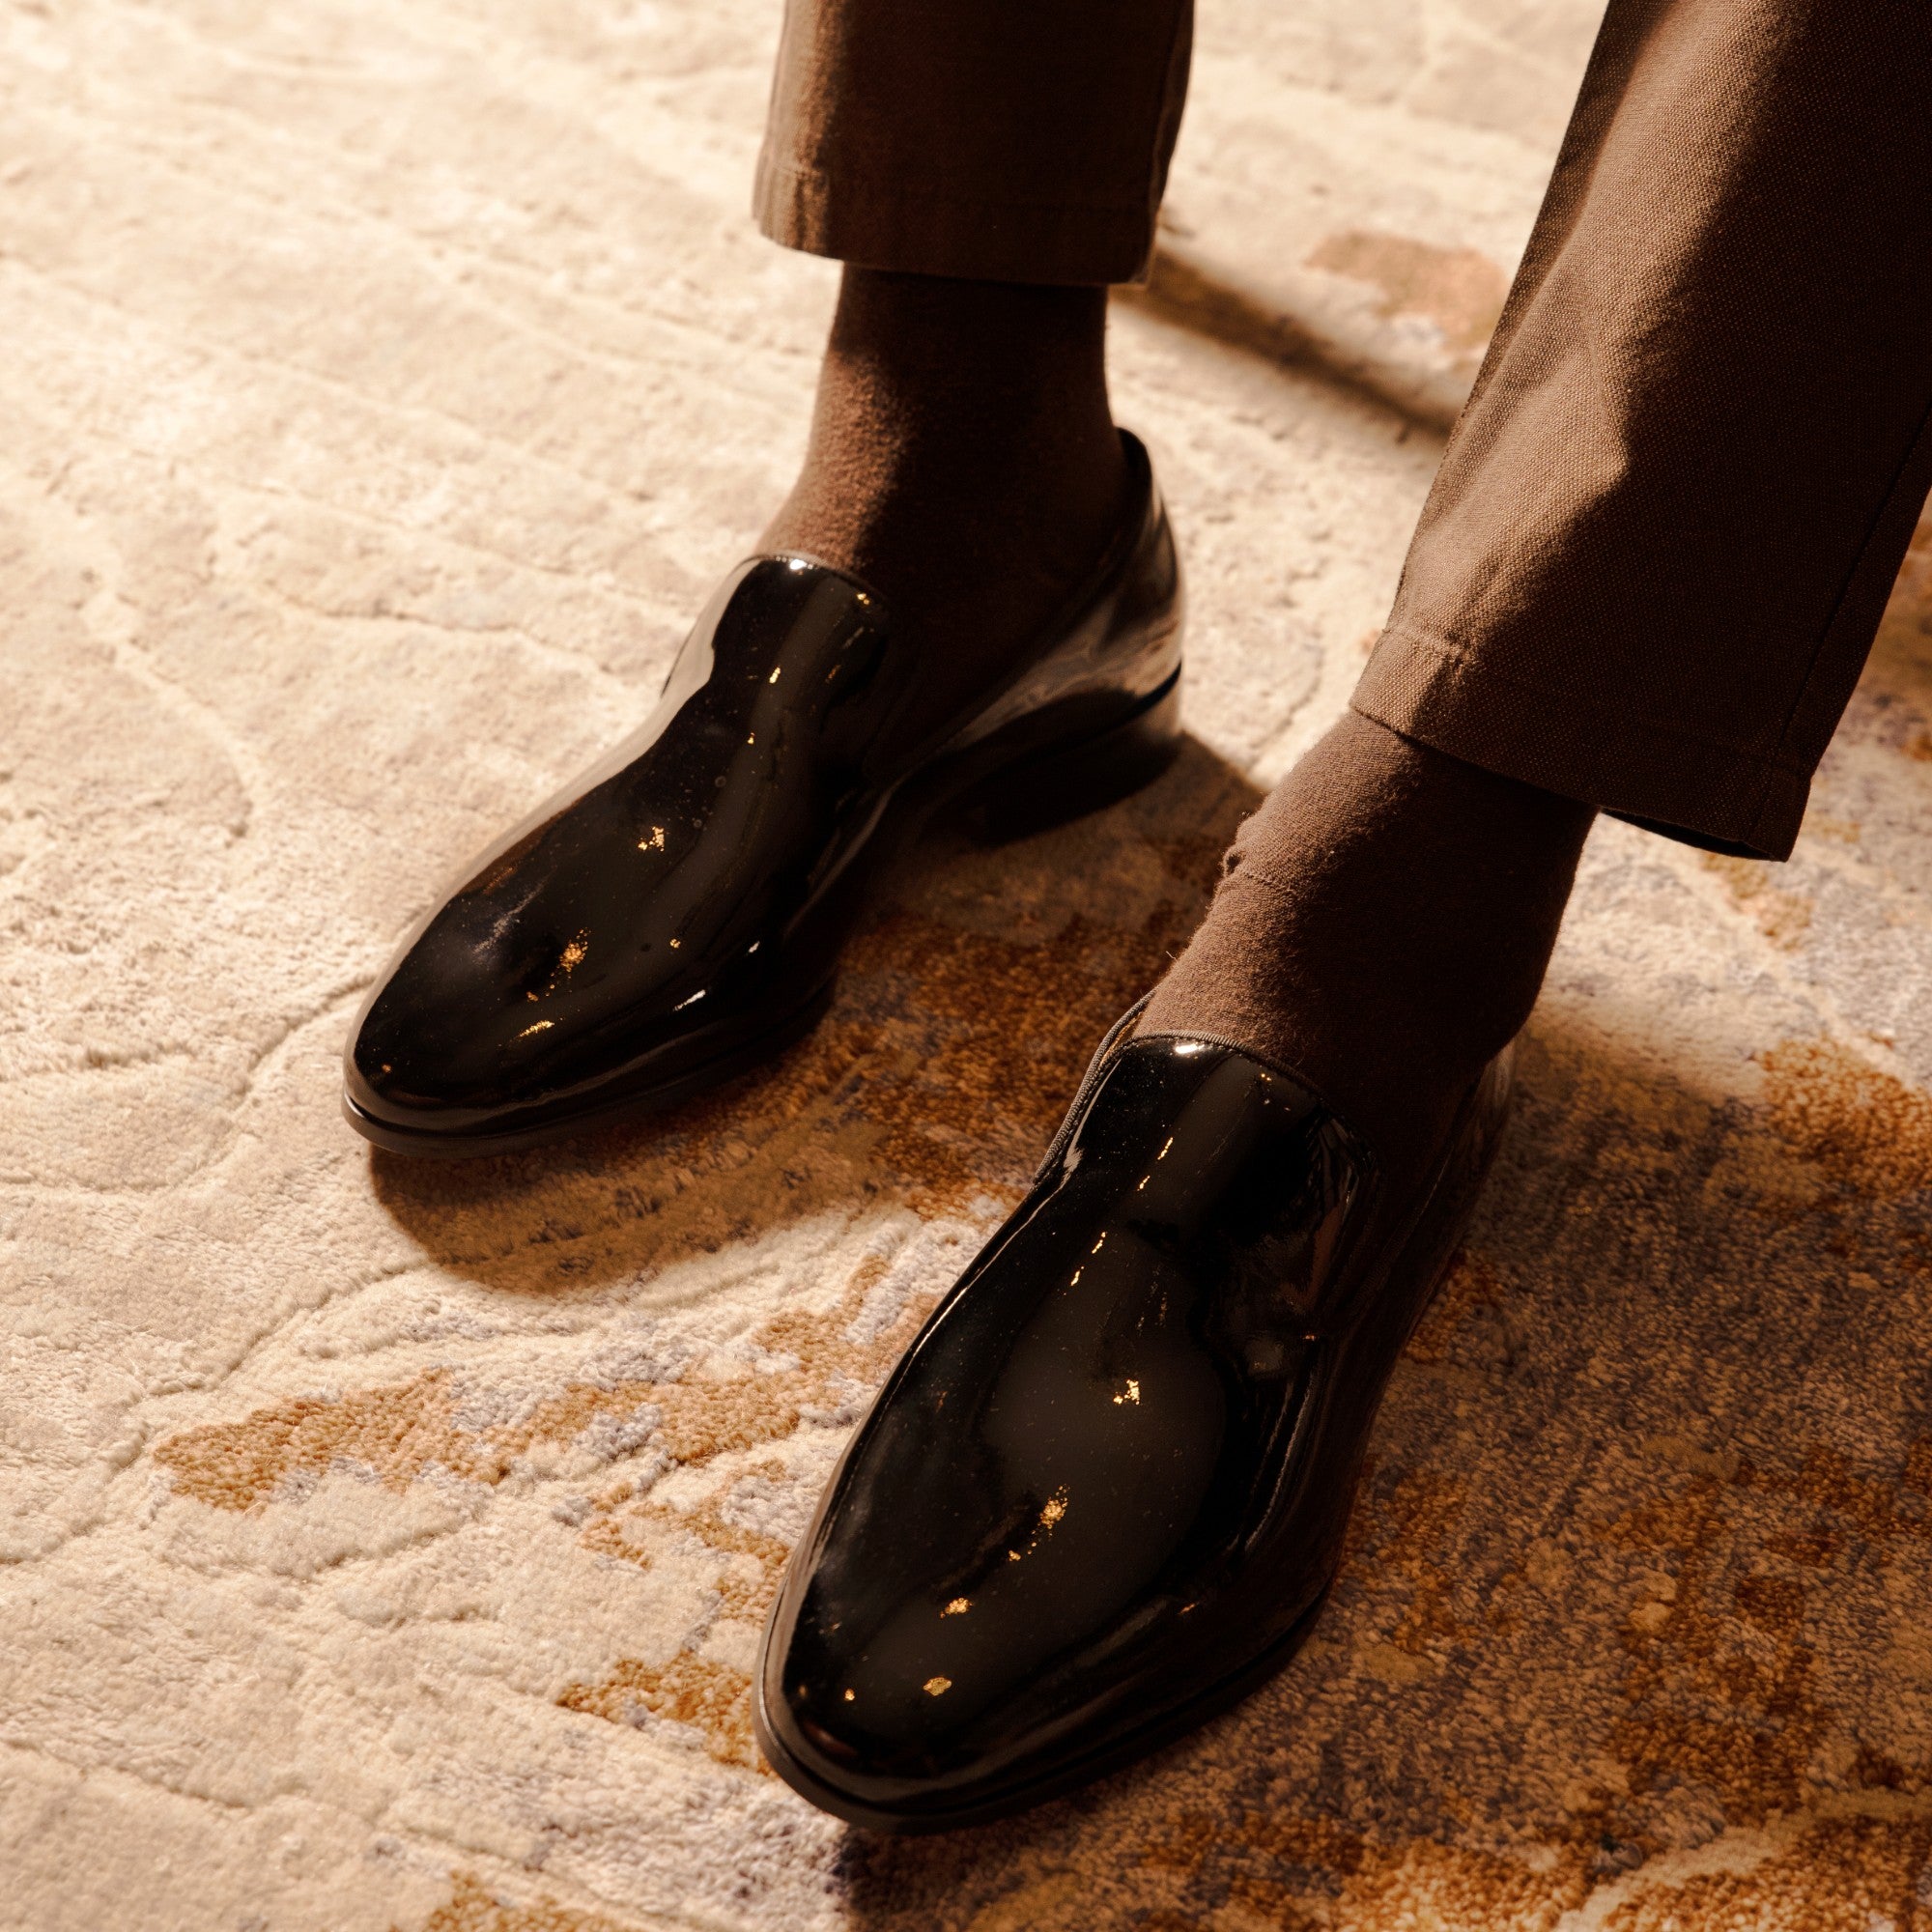 Buy Venetian Loafer - Patent Black Colour Shoe for Men Online UK 11 / US 12 / EUR 45 / Black Patent